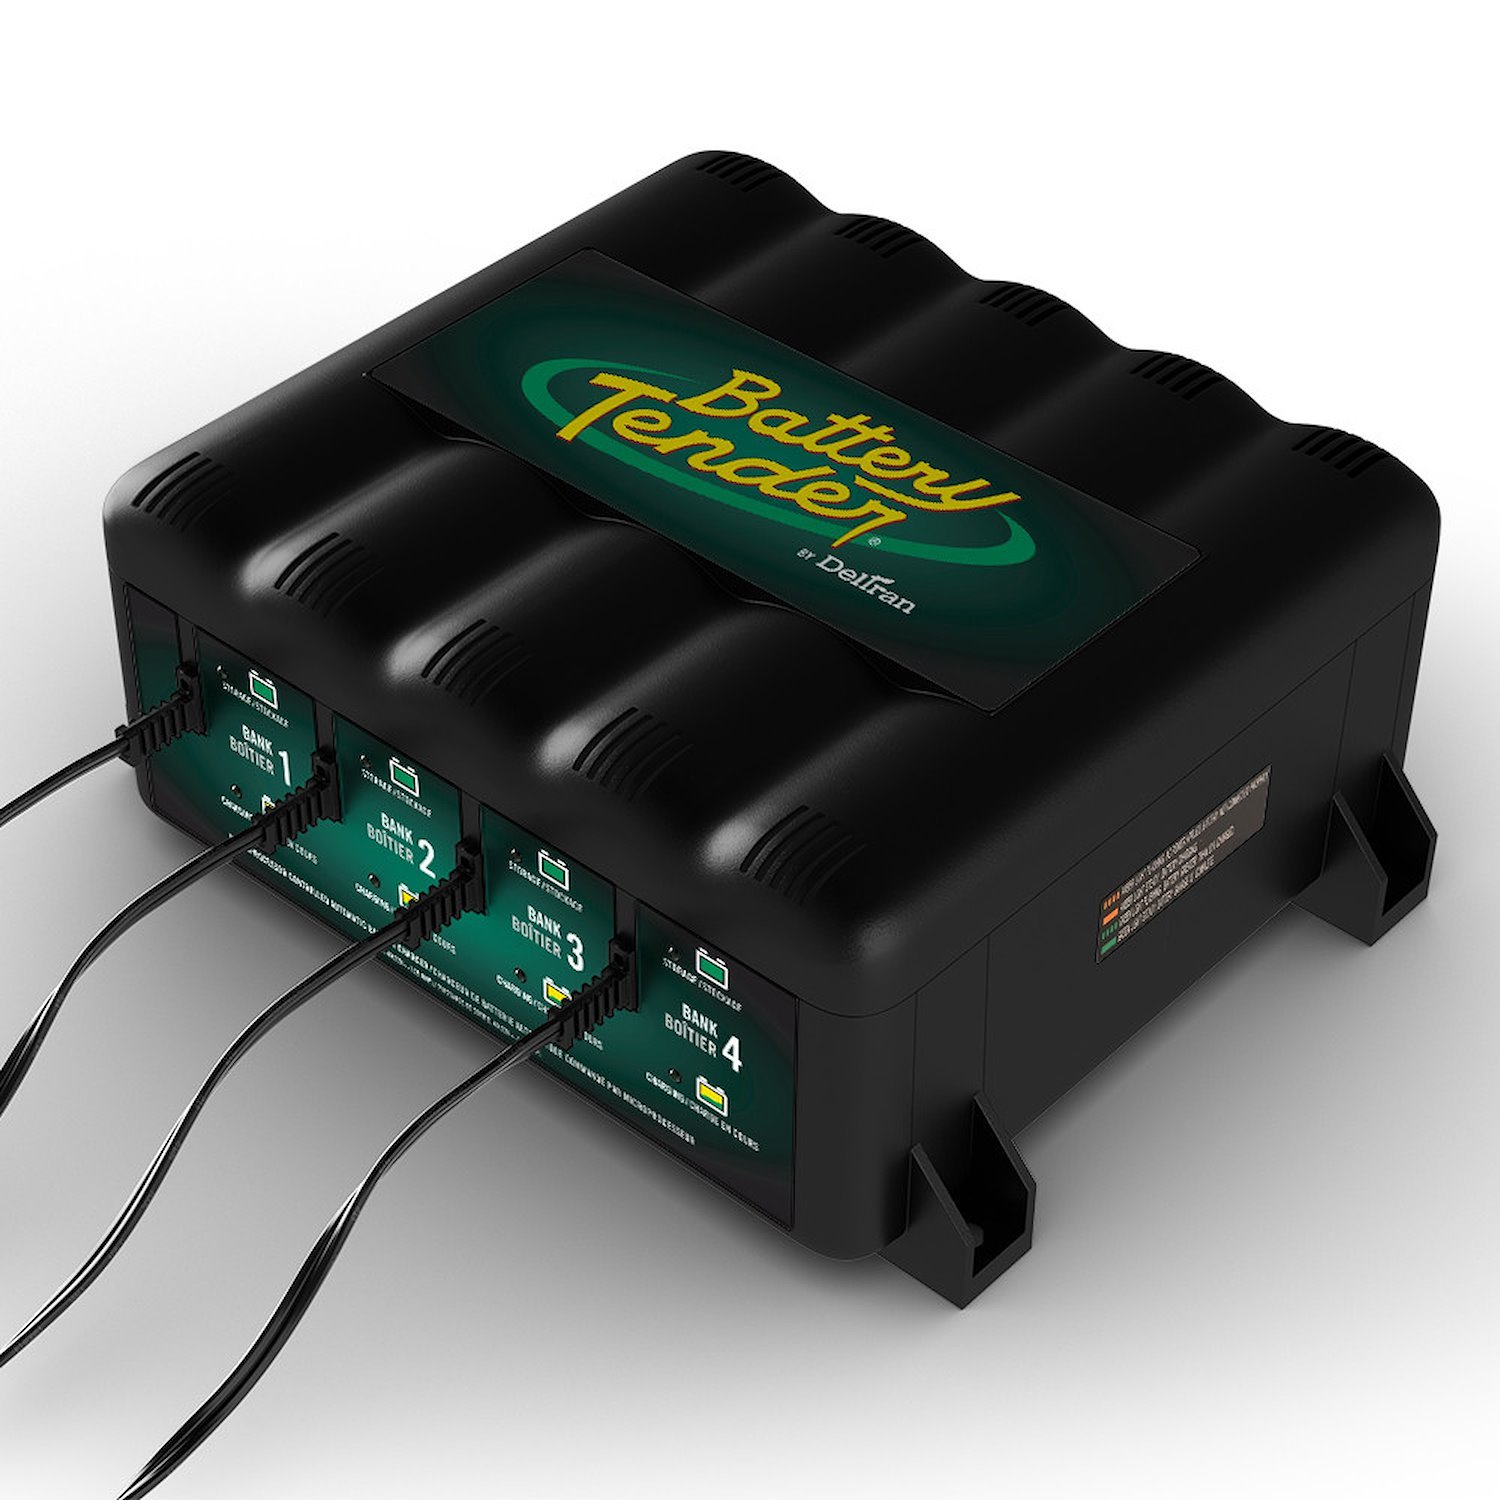 022-0148-DL-WH 4-Bank Battery Charger 12V @ 1.25 amps per bank